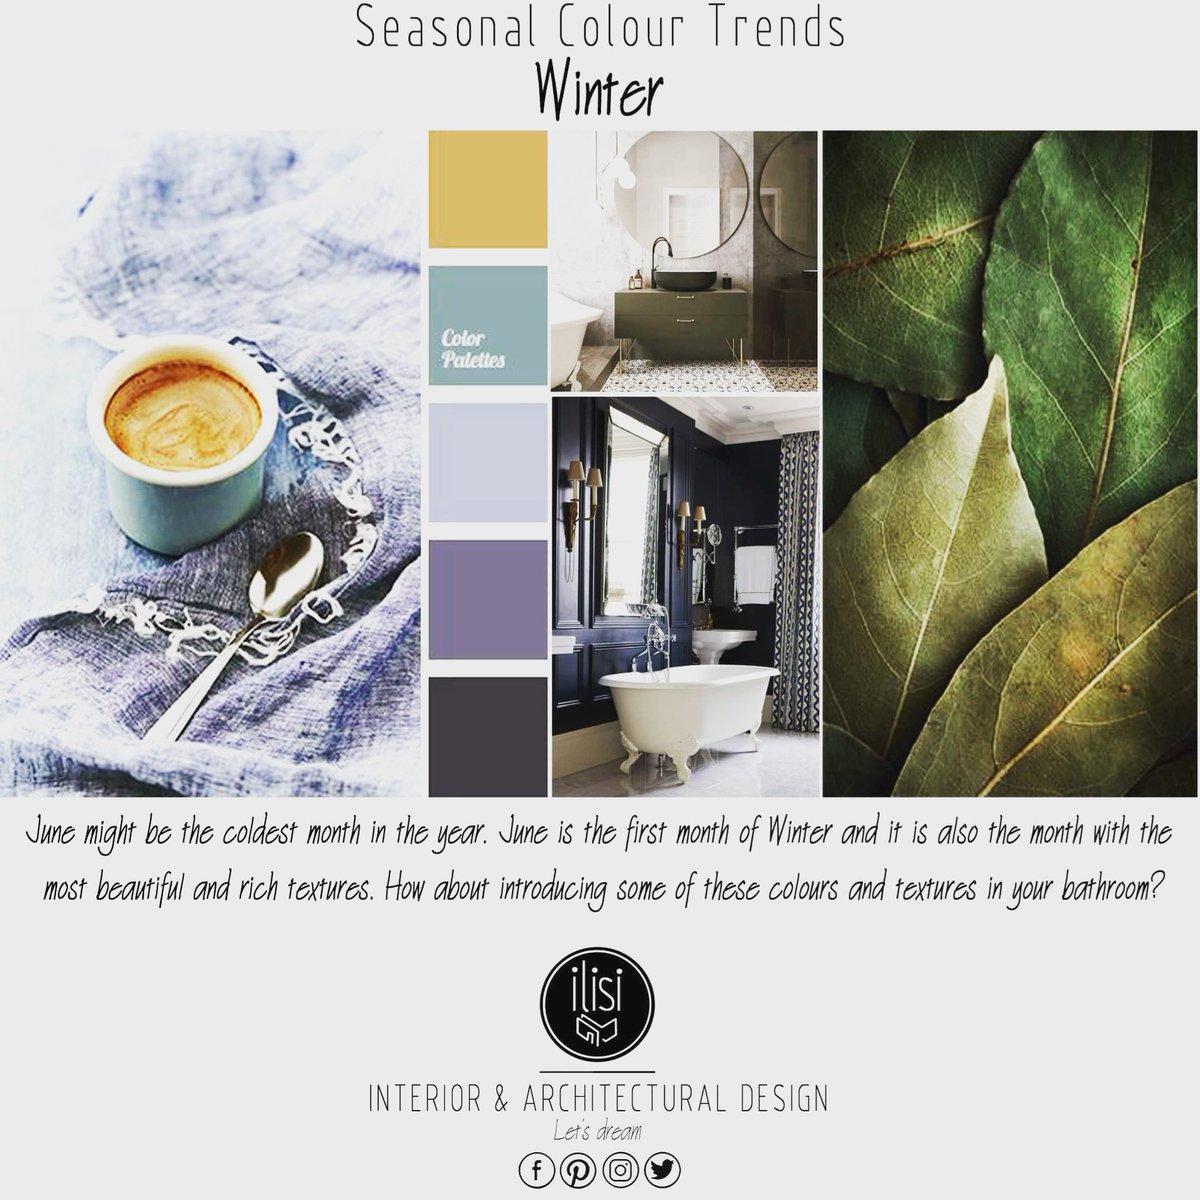 Winter Bathroom Colour Scheme Trends
#firstmonthofwinter 
#winter 
#wintercolourschemes 
#wintertrend